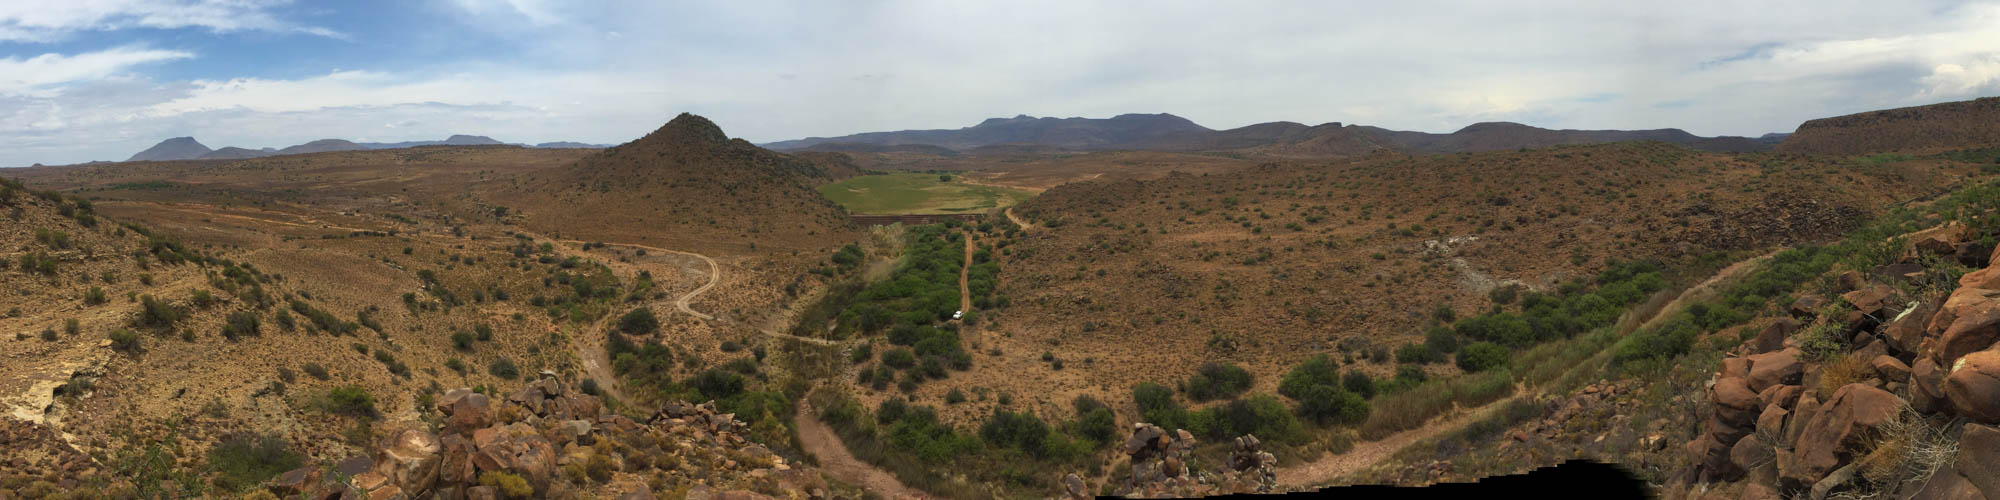 landscape of karoo mountains valley road bush